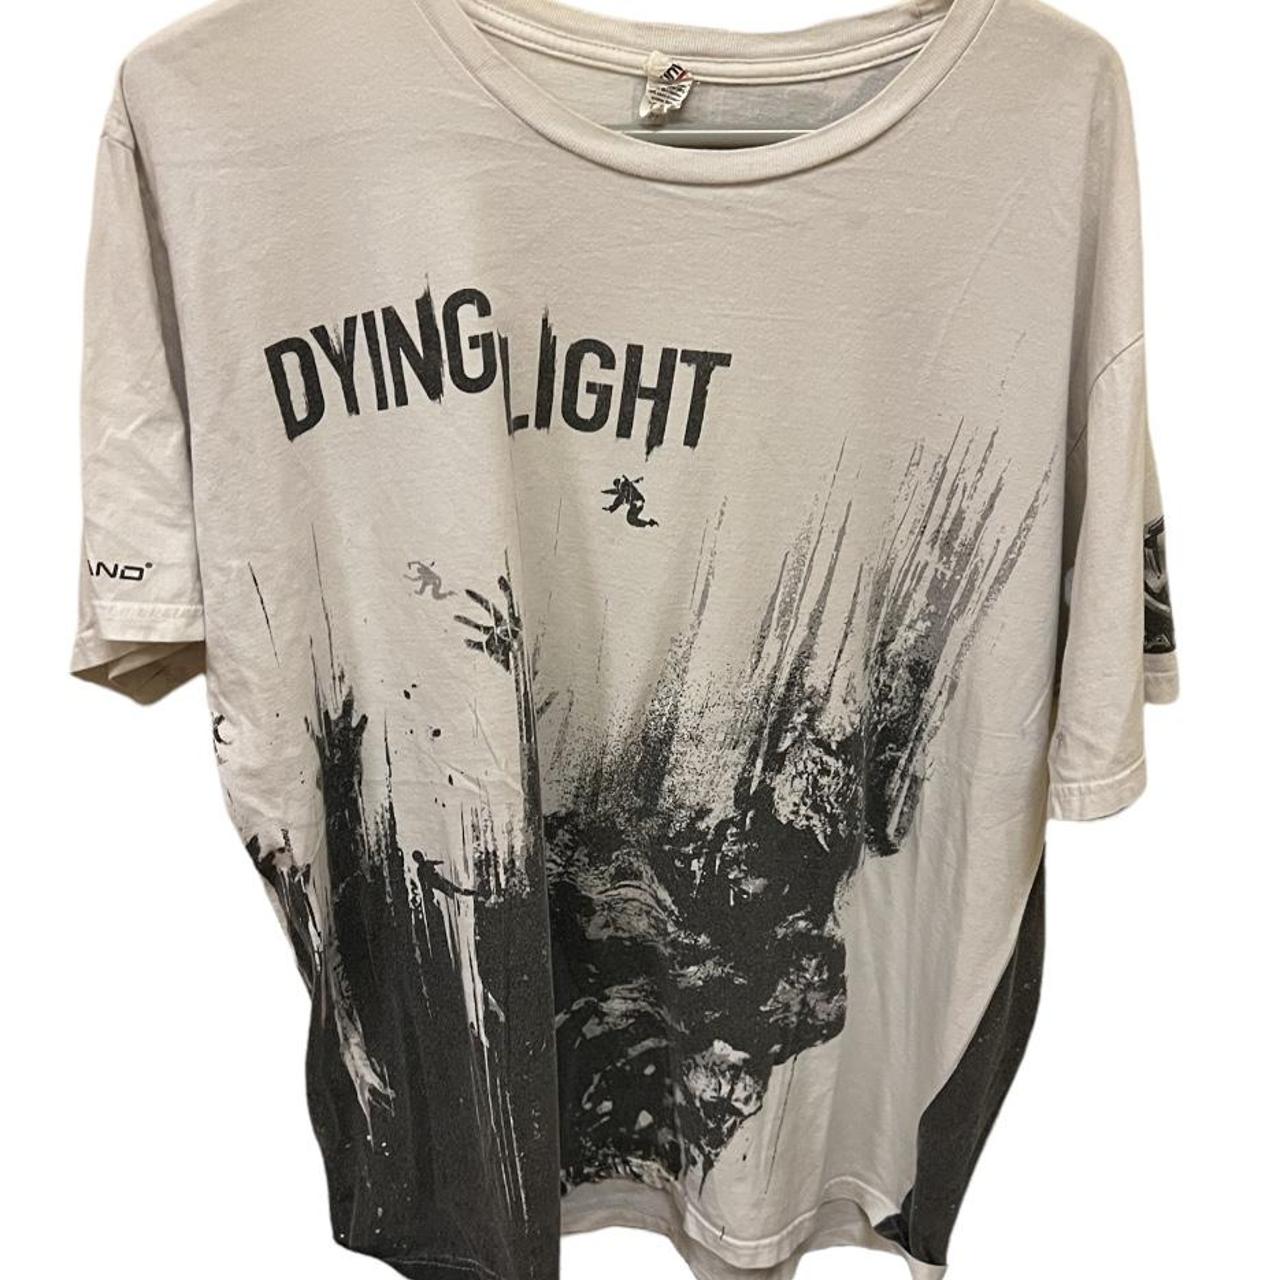 2015 Dying Light Video Game T-Shirt by Warner... - Depop